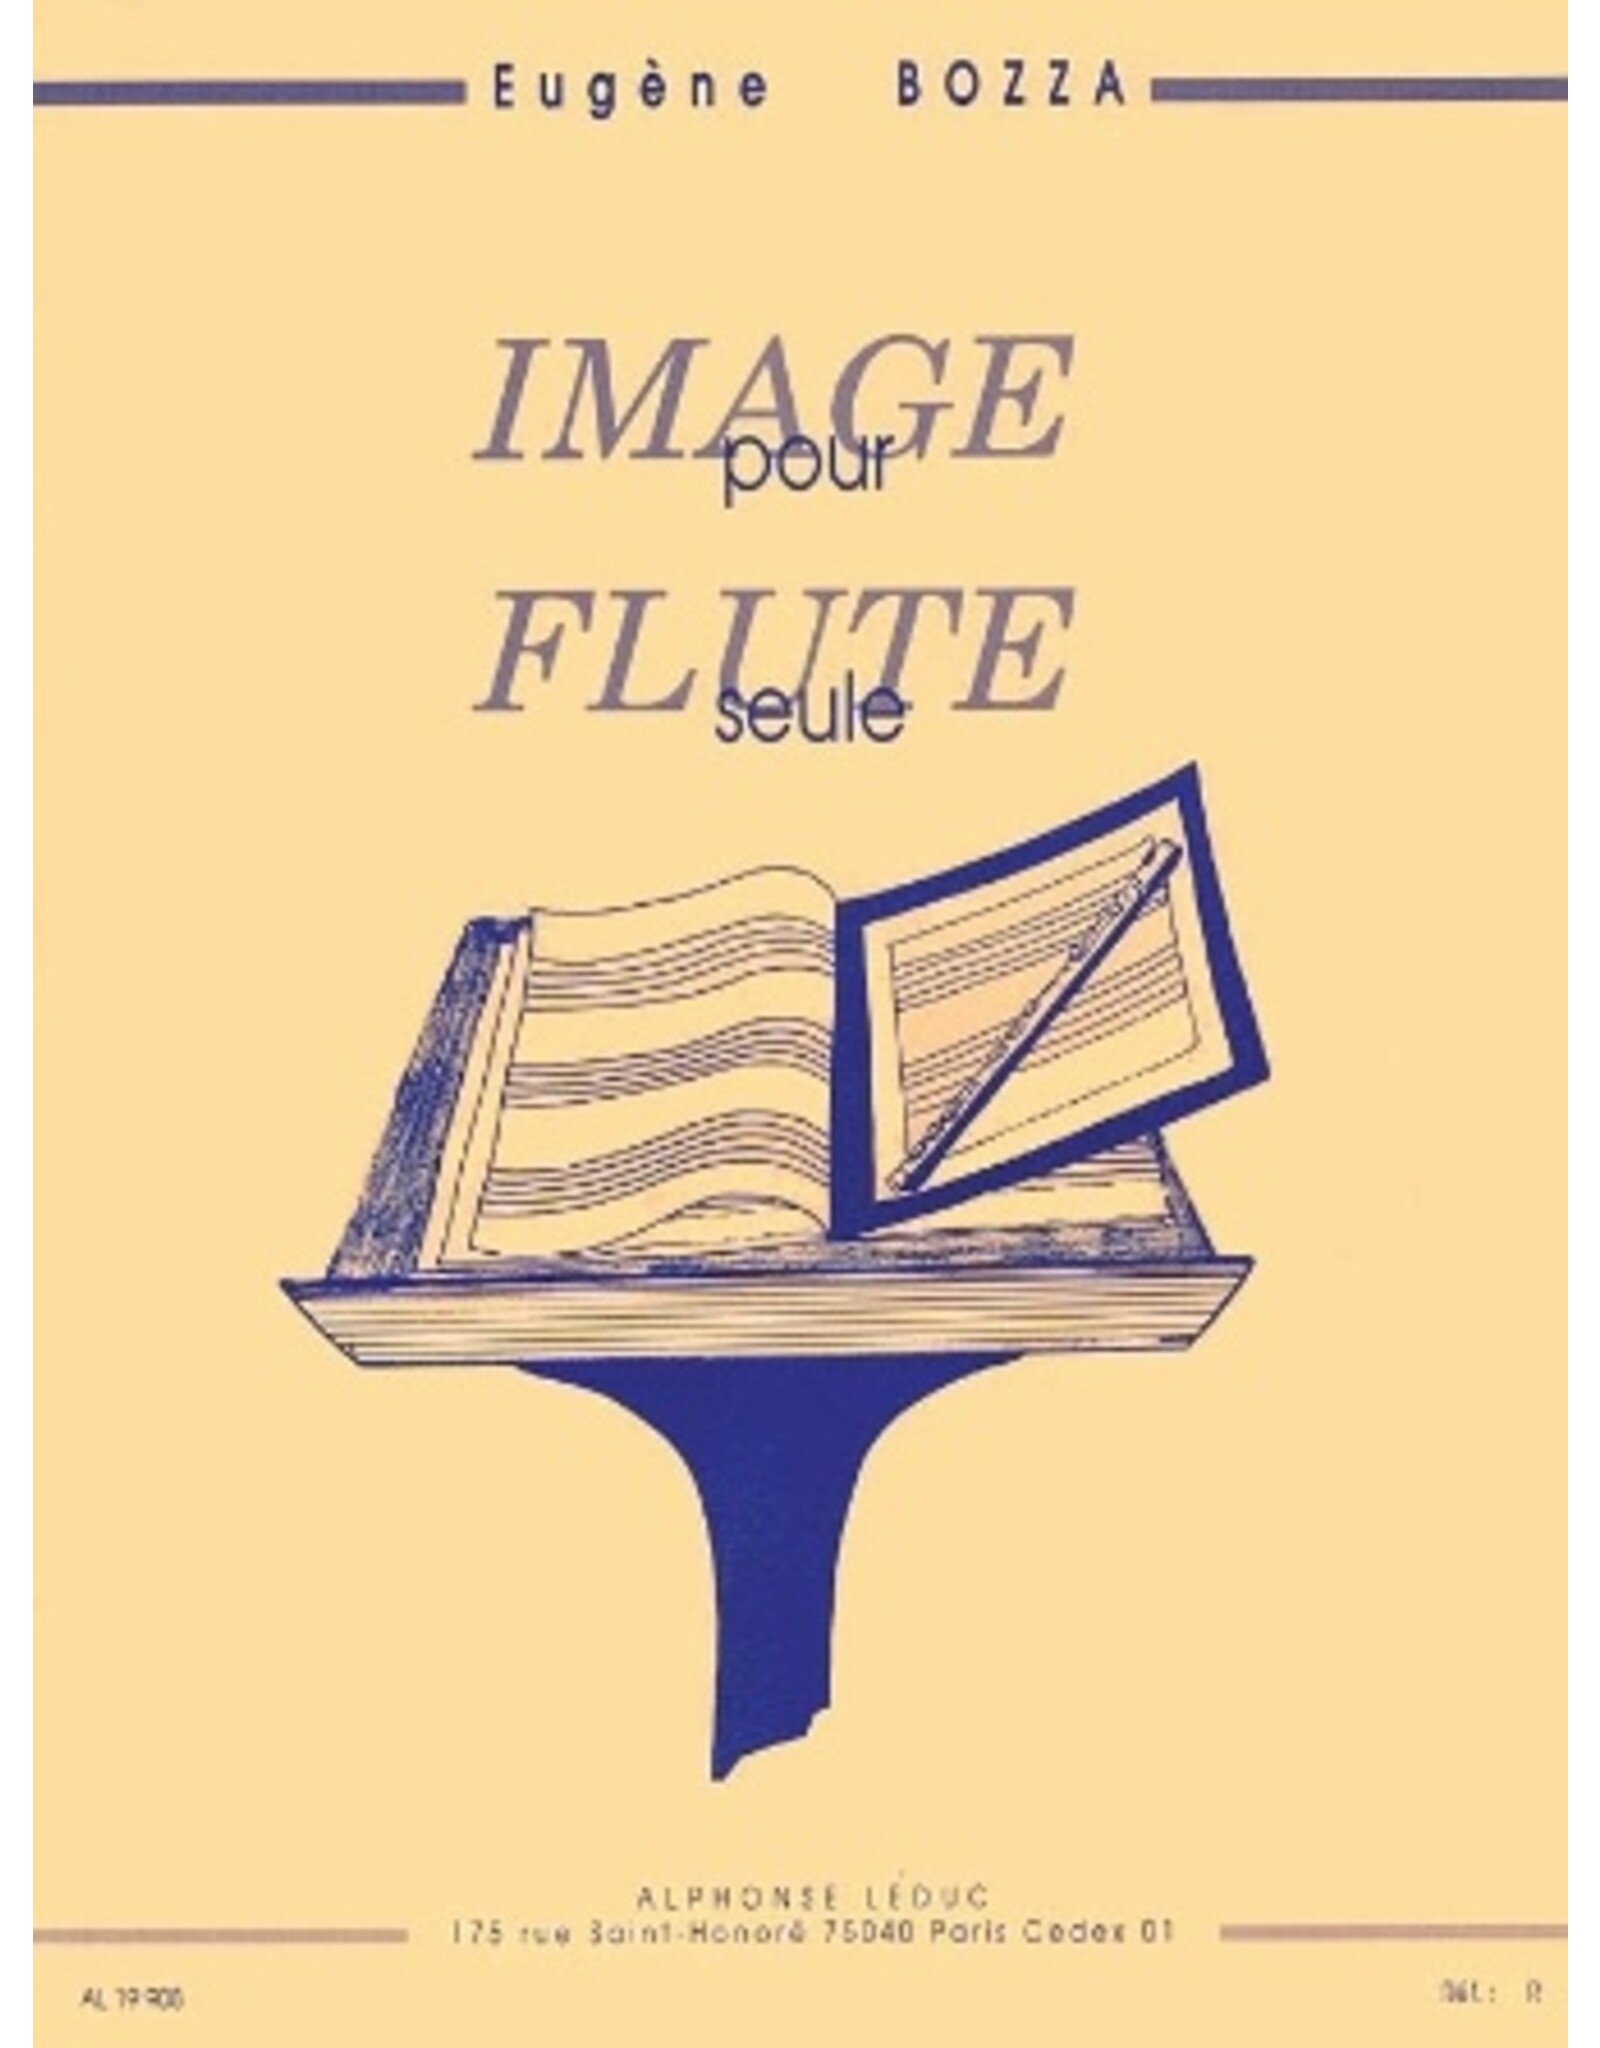 Alphonse Leduc Bozza - Image Op. 38 for Flute Solo Softcover